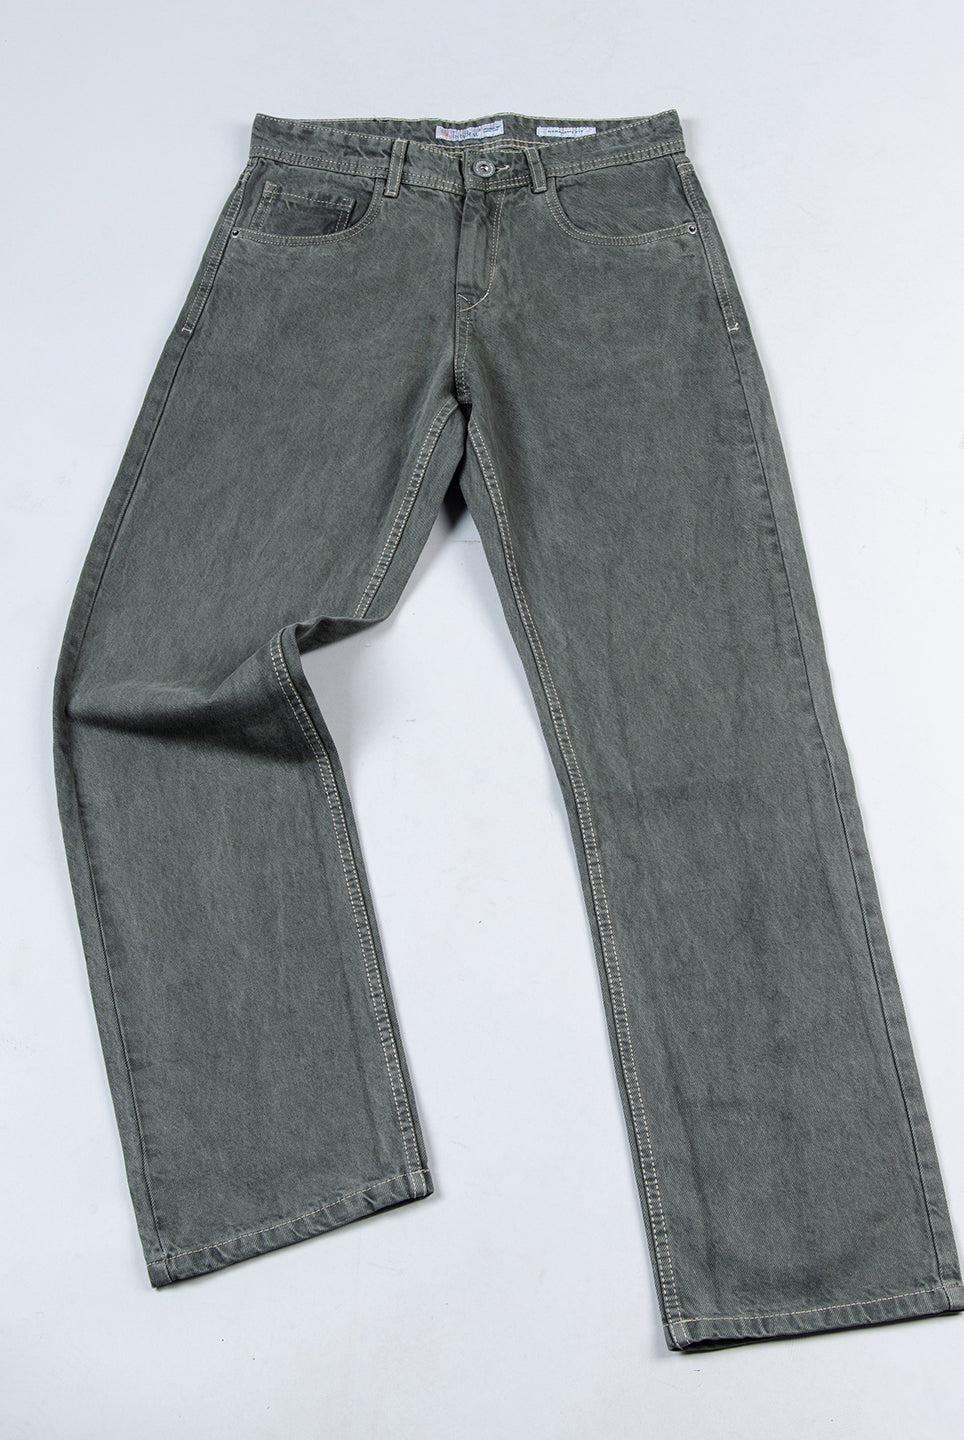 olive green denim jeans